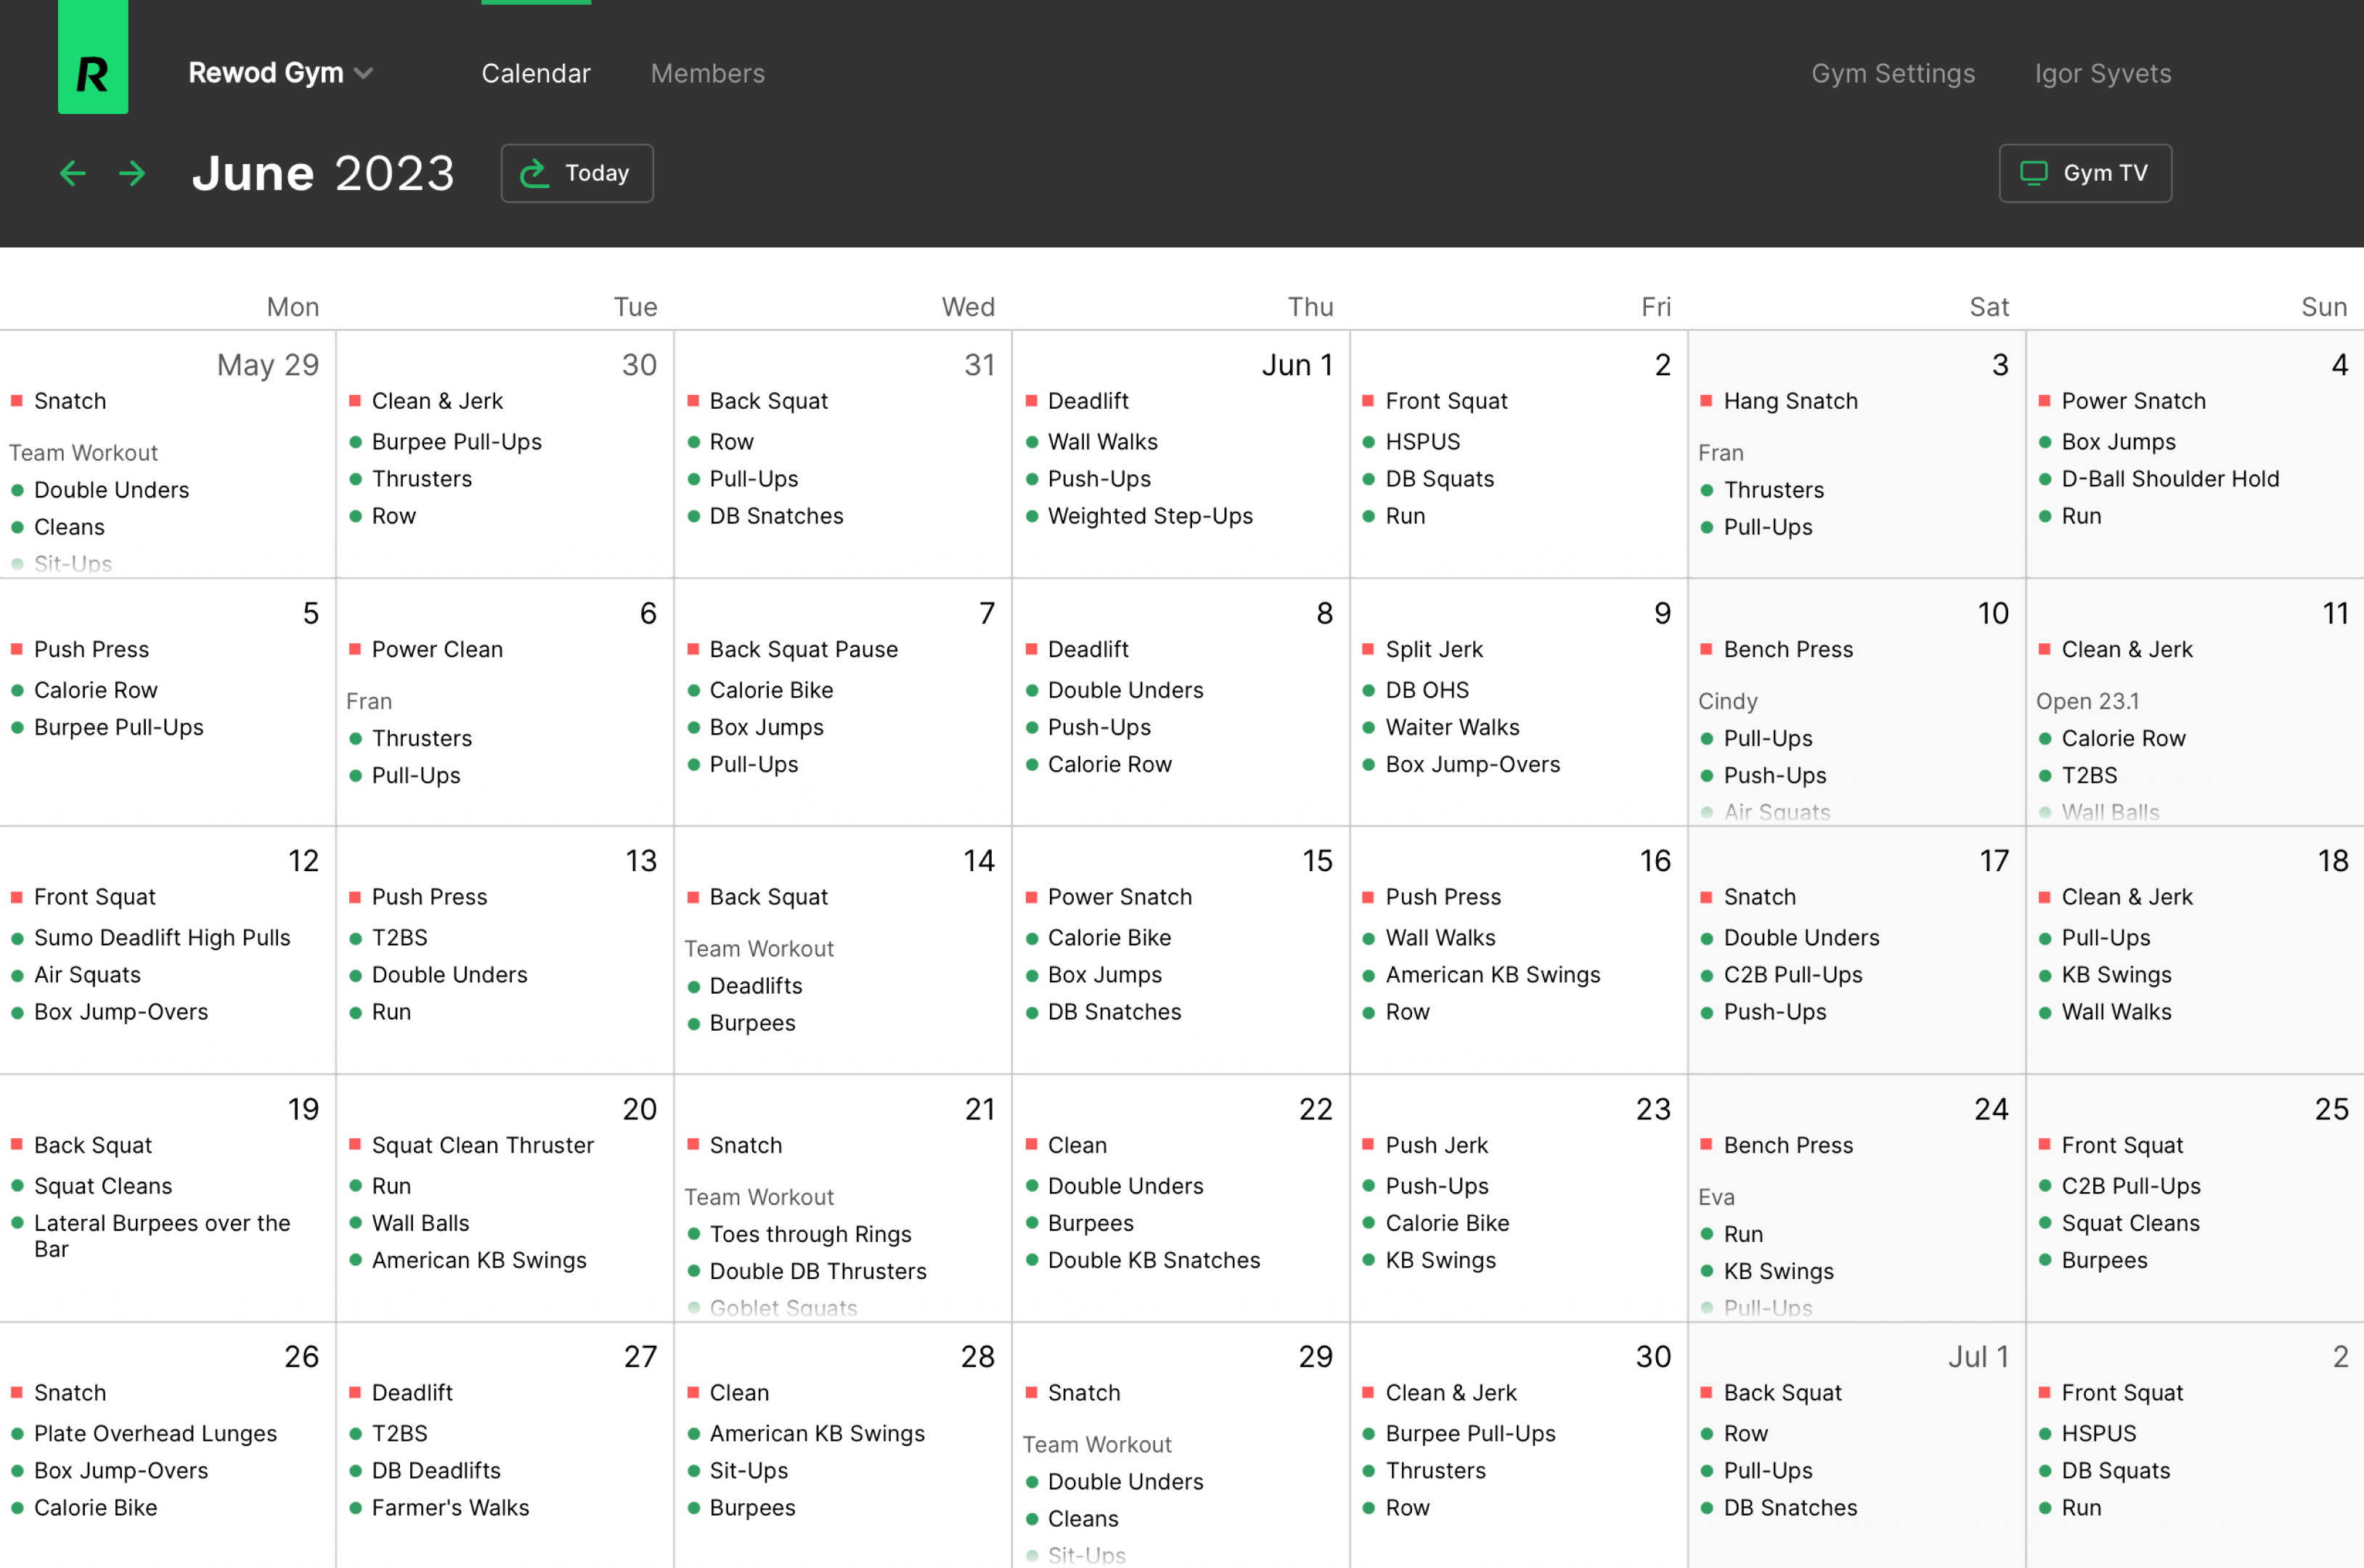 A screenshot from Rewod coaches website depicting a calendar with workout schedule